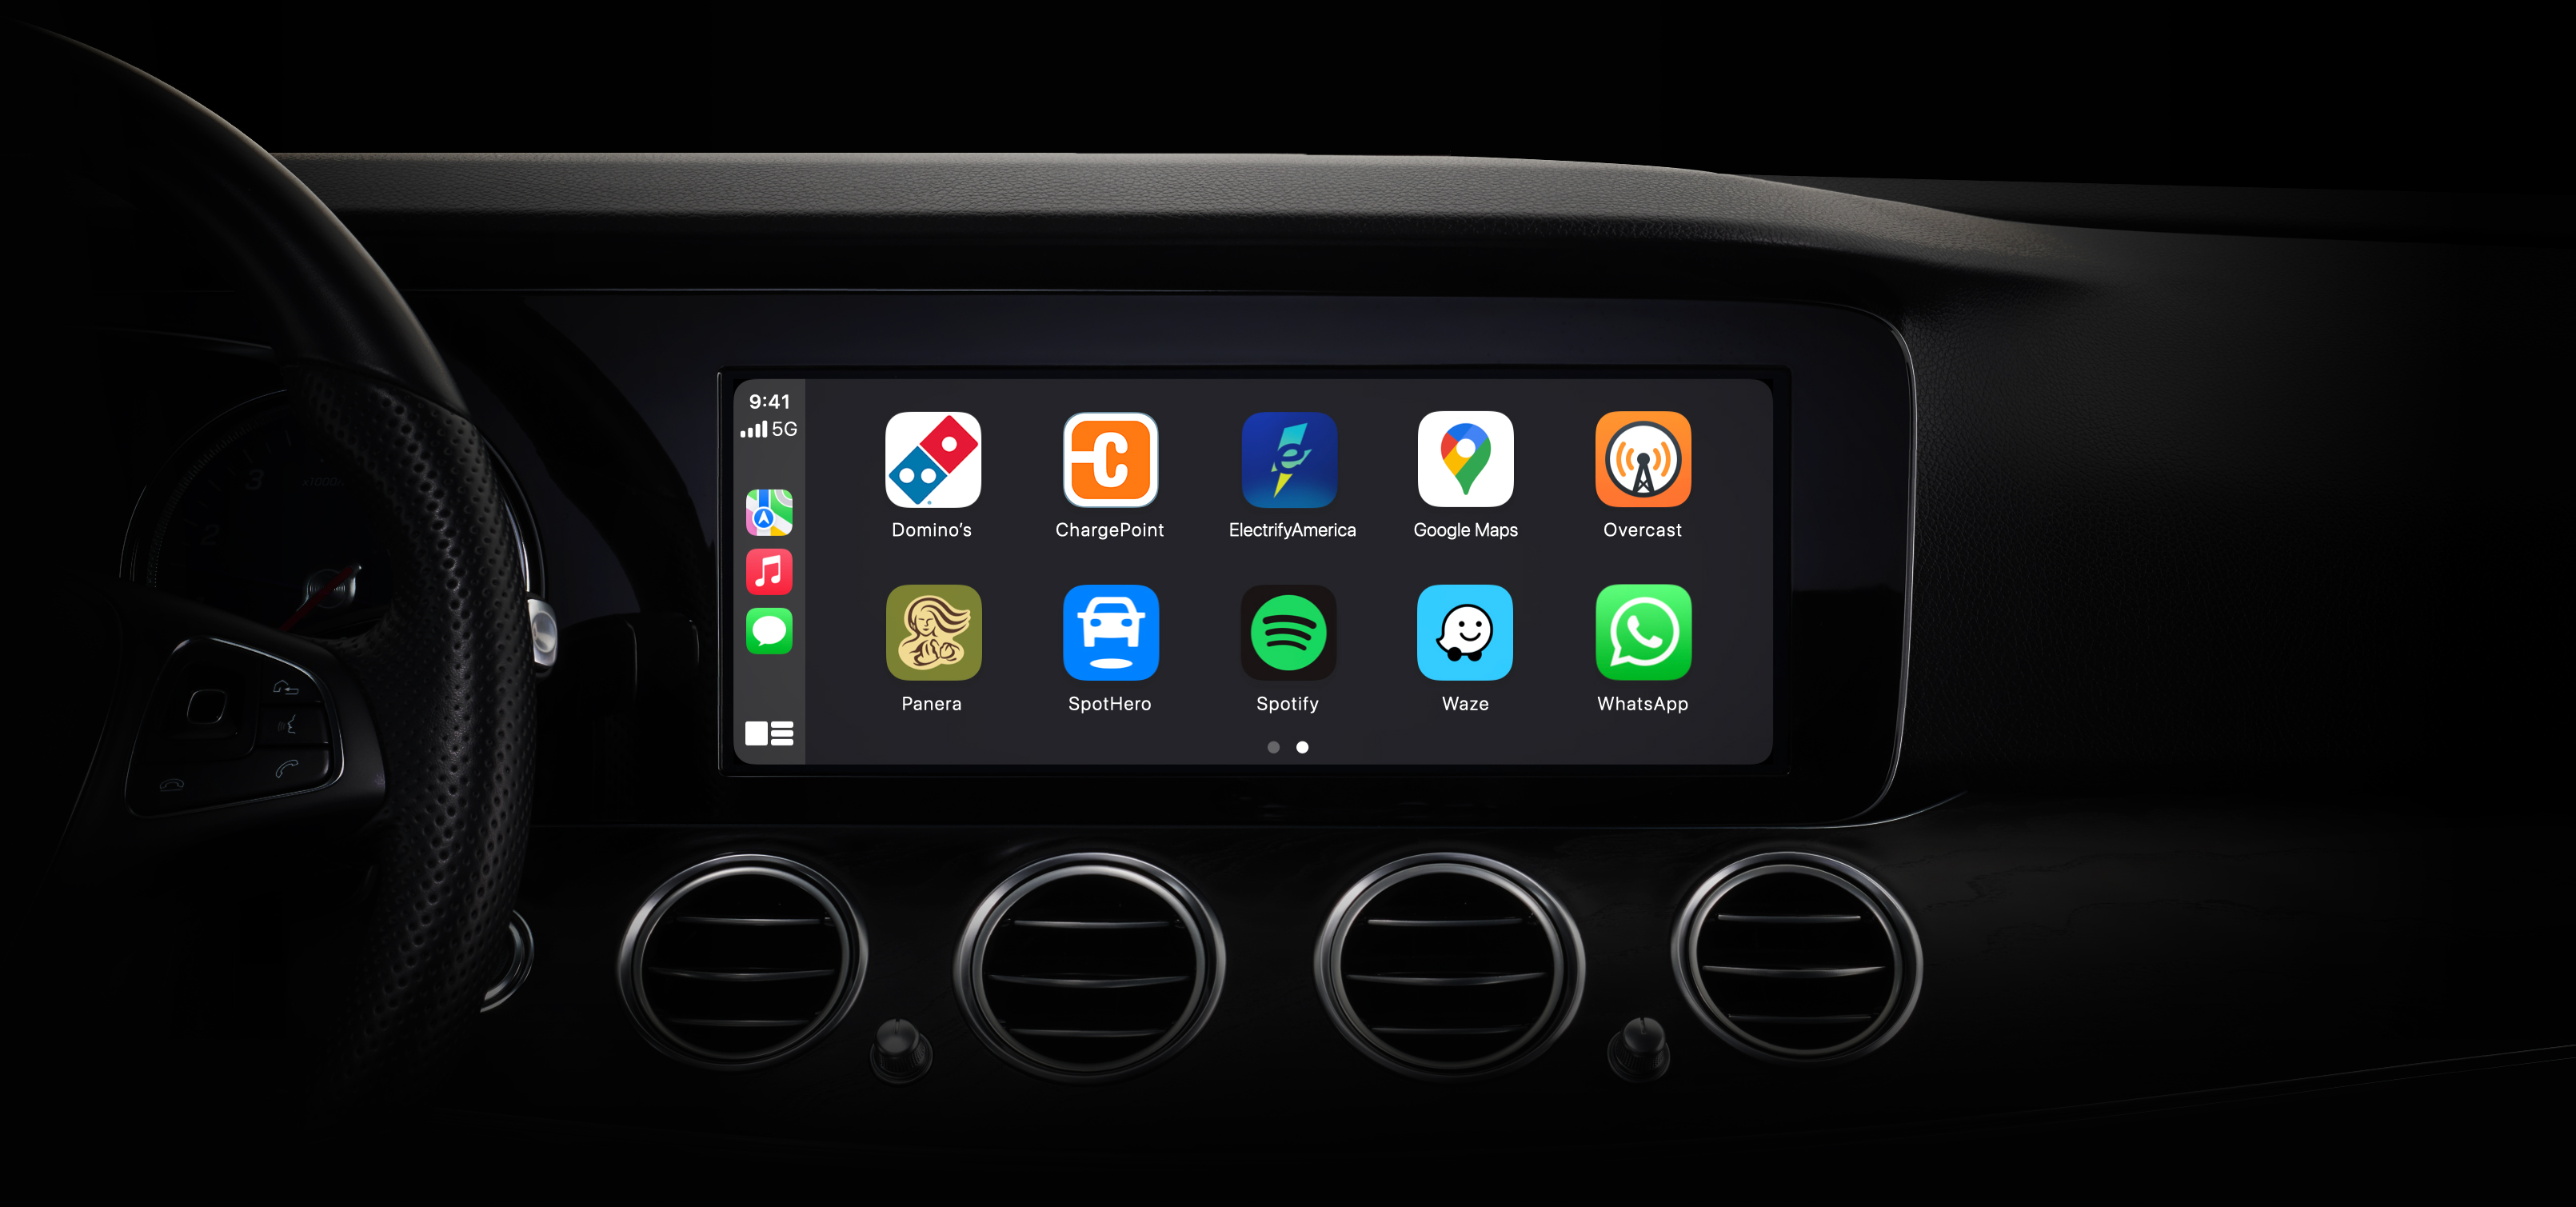 Introducing Domino's on Apple CarPlay